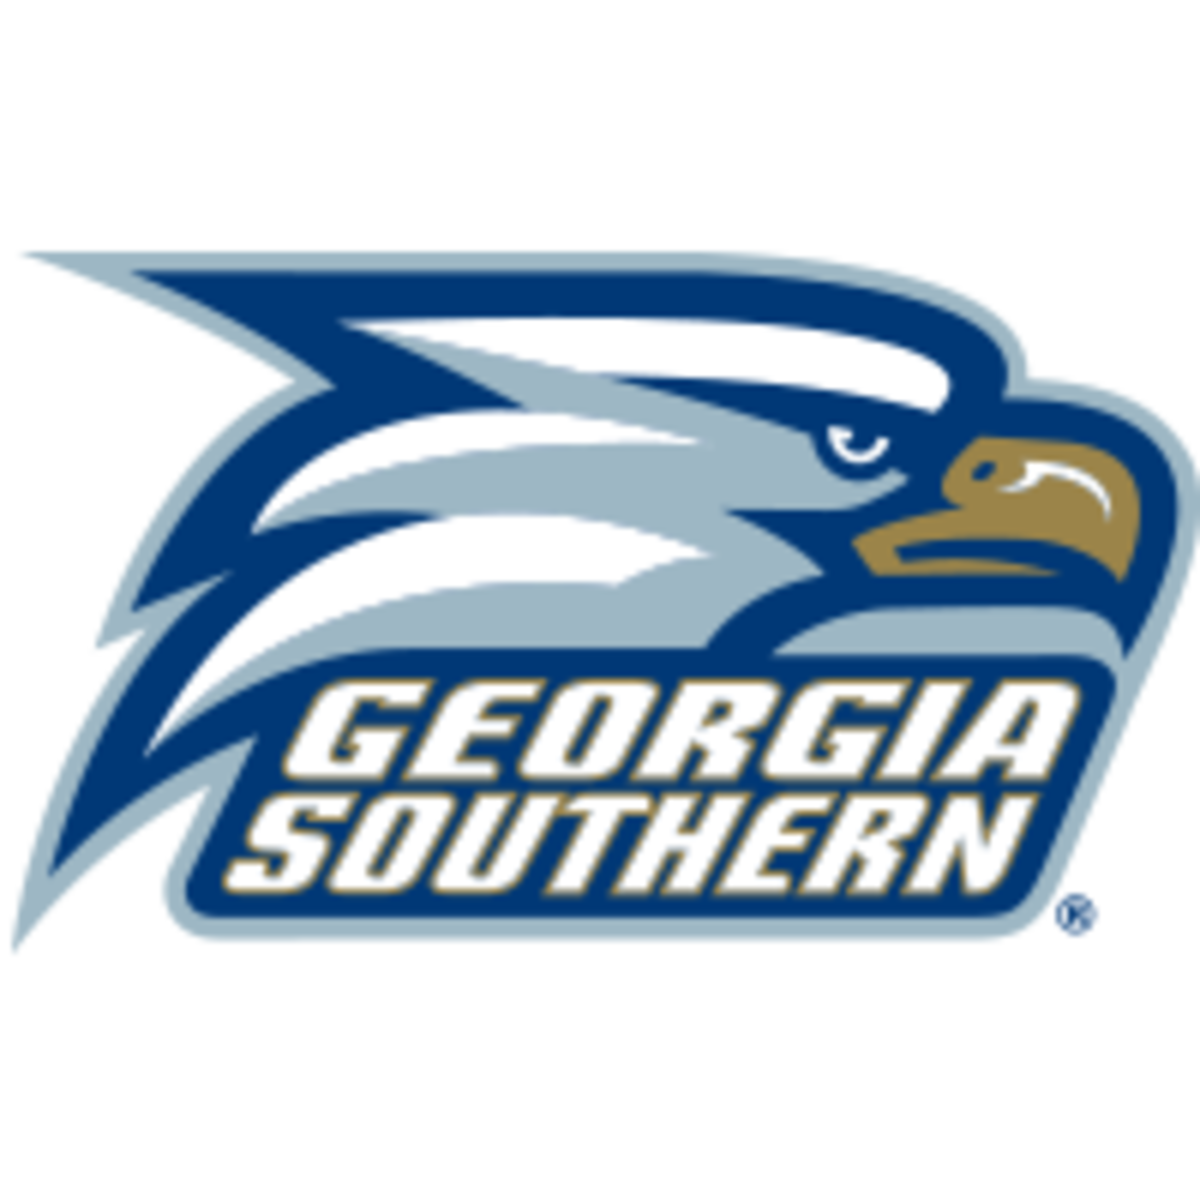 College Football Rankings: Georgia Southern